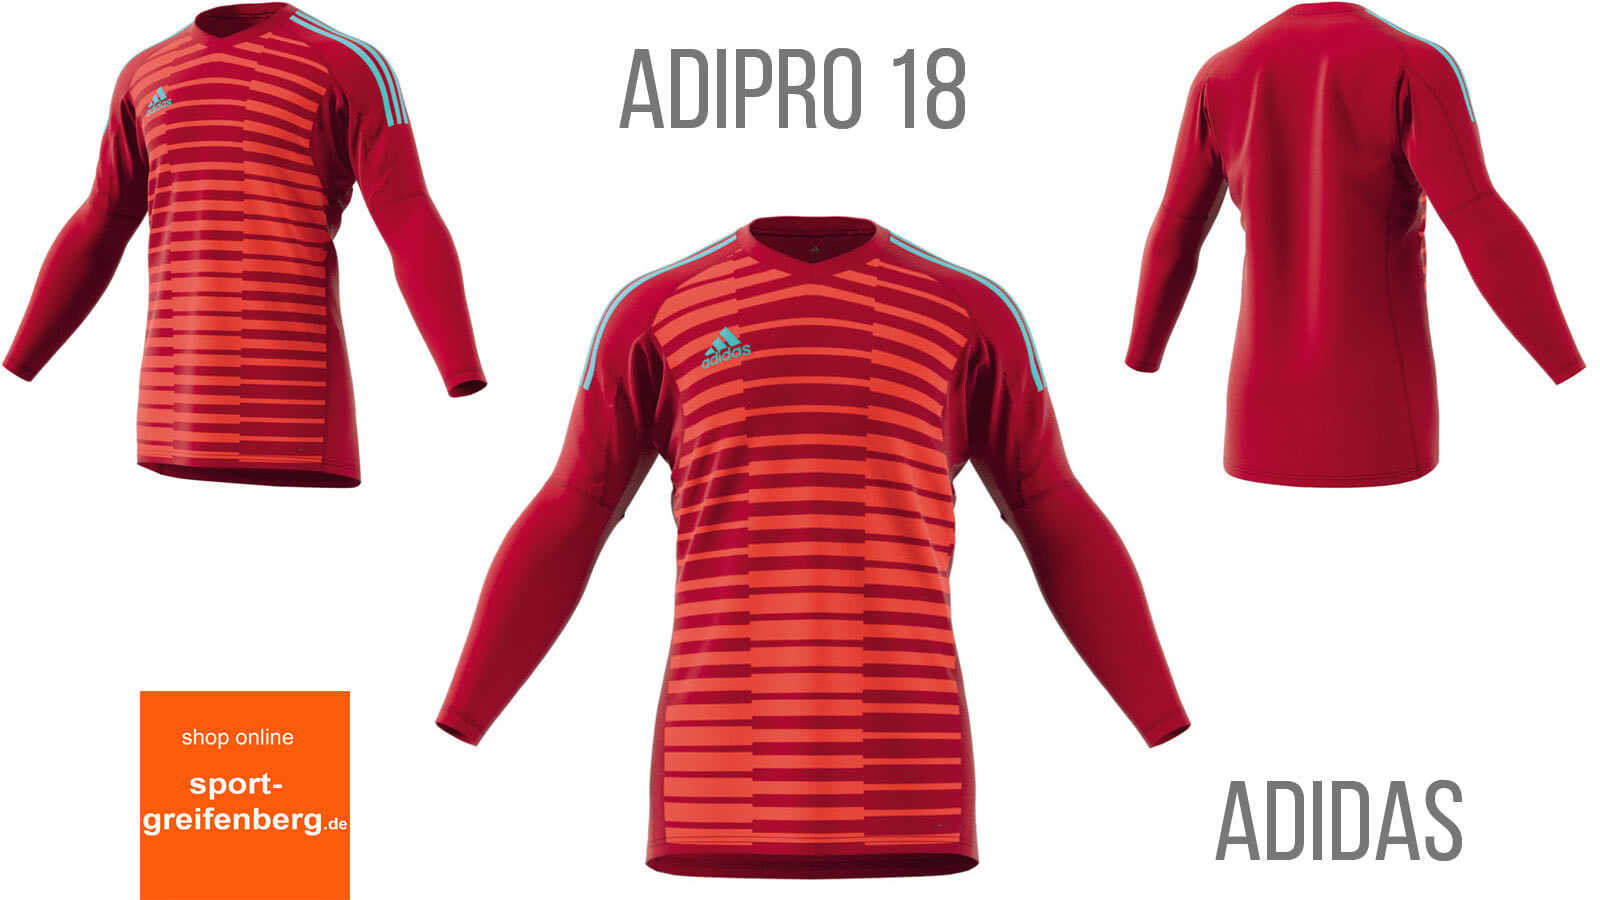 Das Adidas adipro 18 GK Jersey 2018/2019 als Torwart Trikot